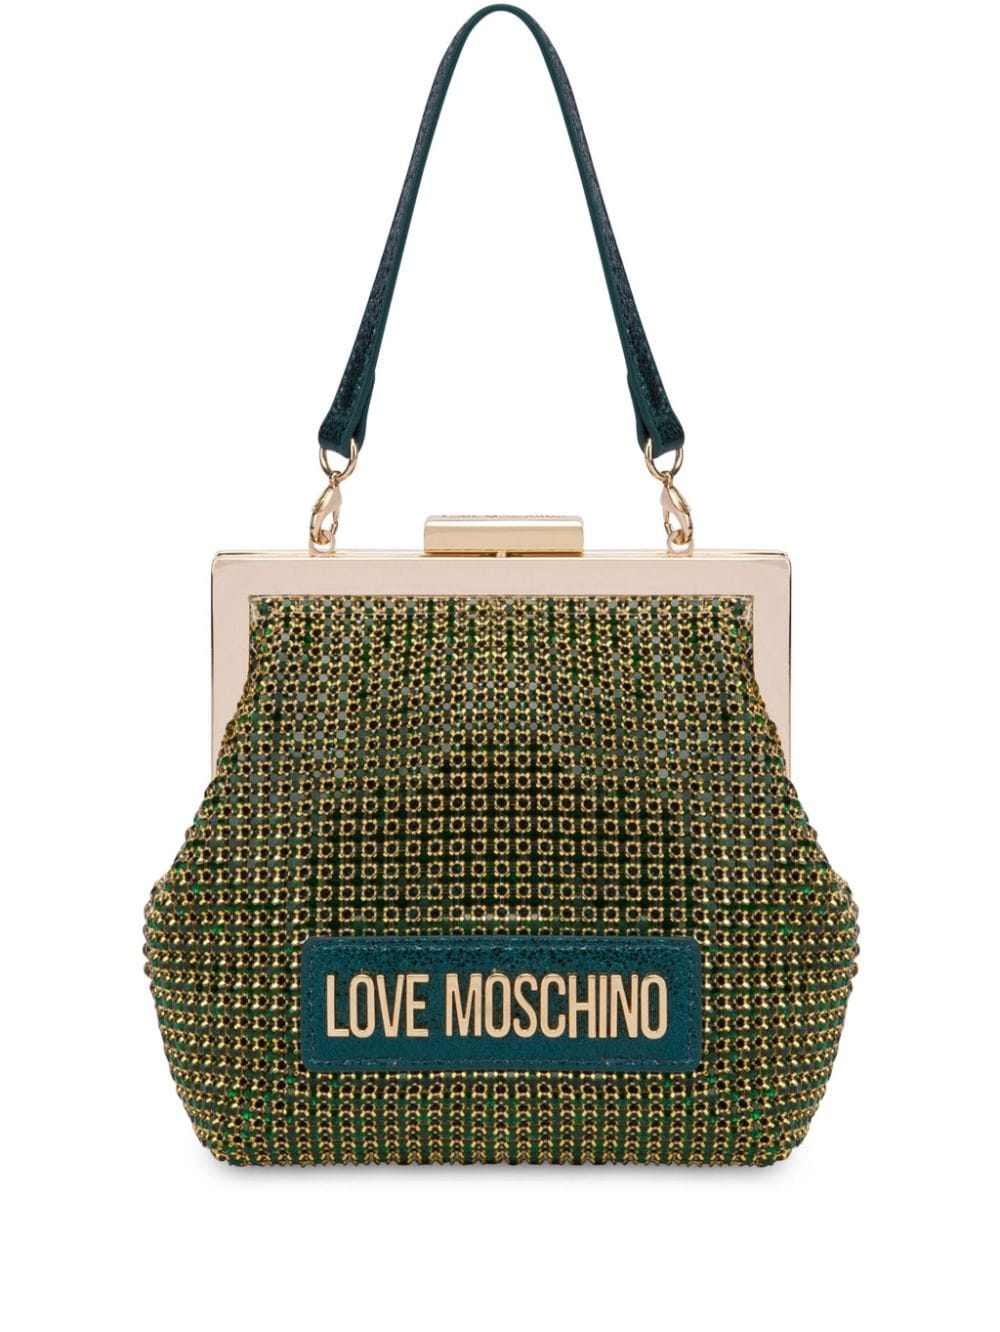 Love Moschino crystal-embellished clutch bag - Green von Love Moschino